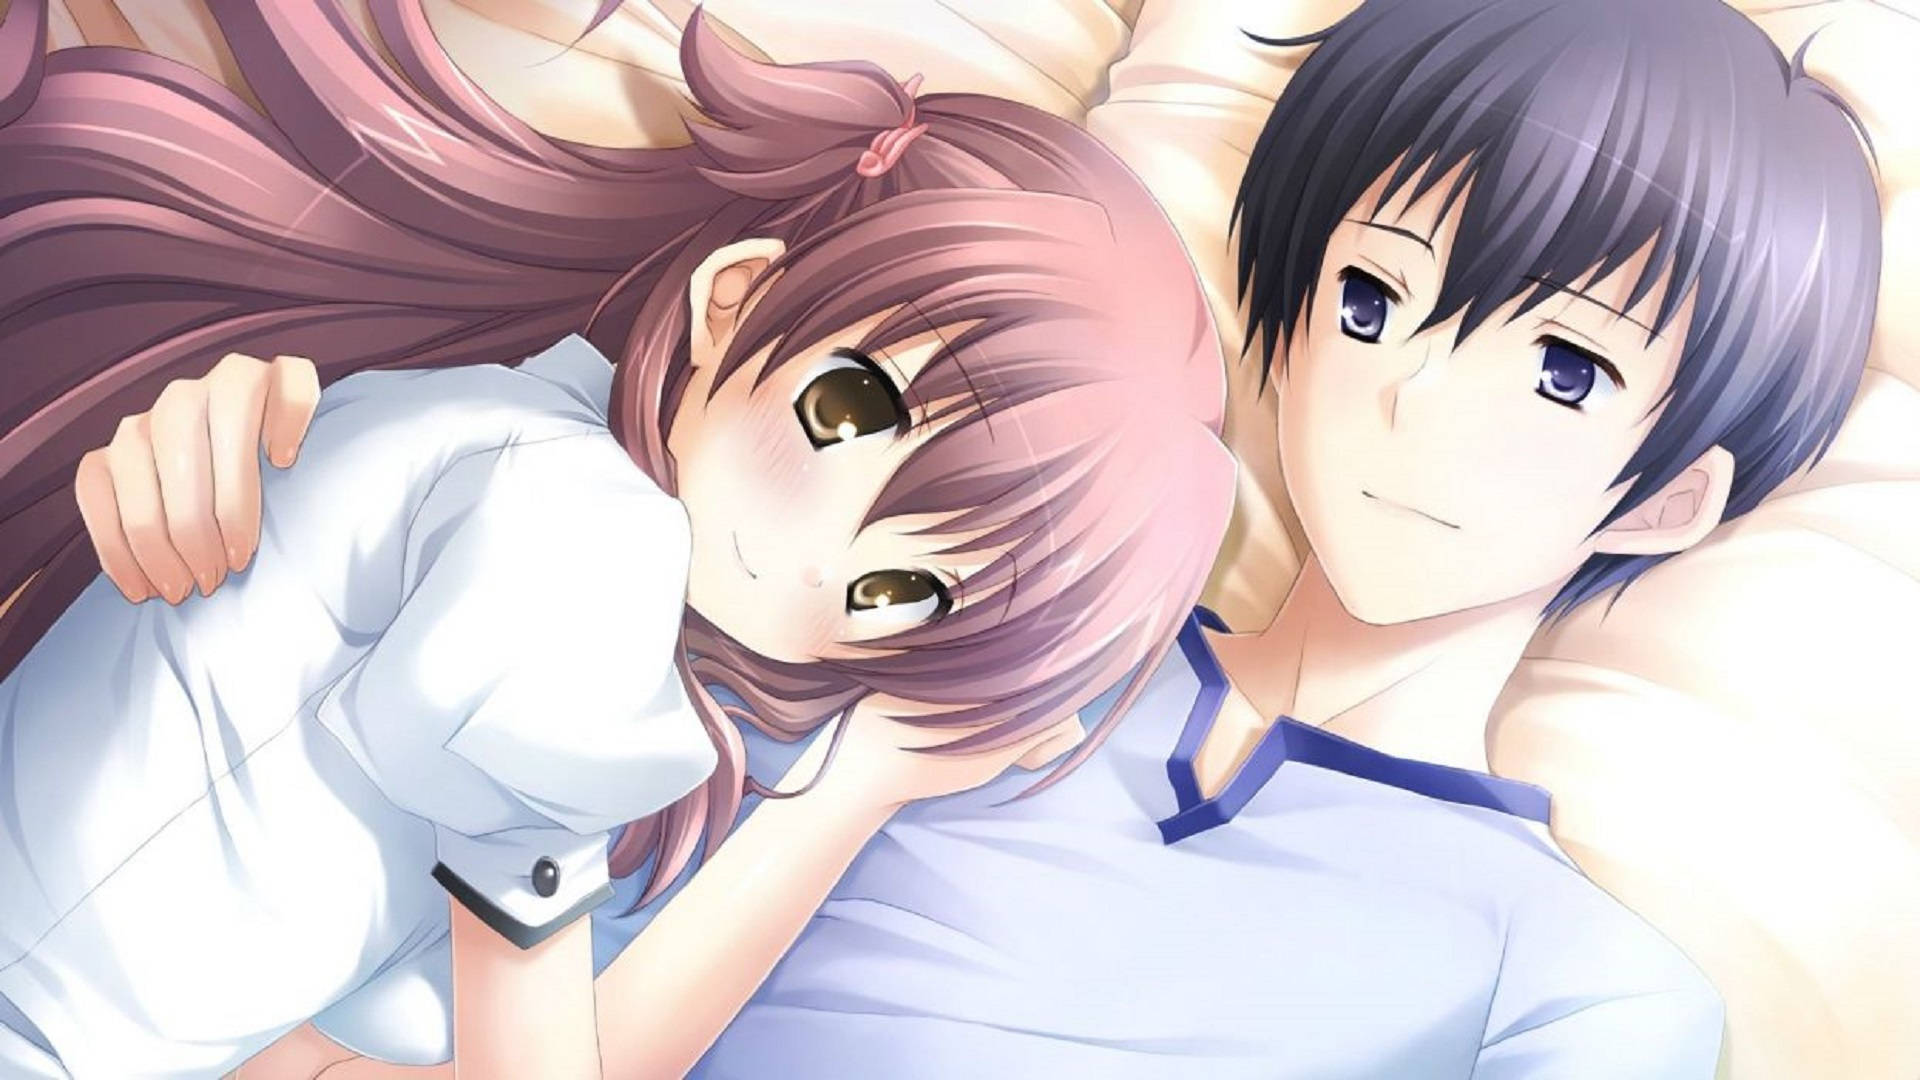 Anime Hug Boy And Girl In Bed